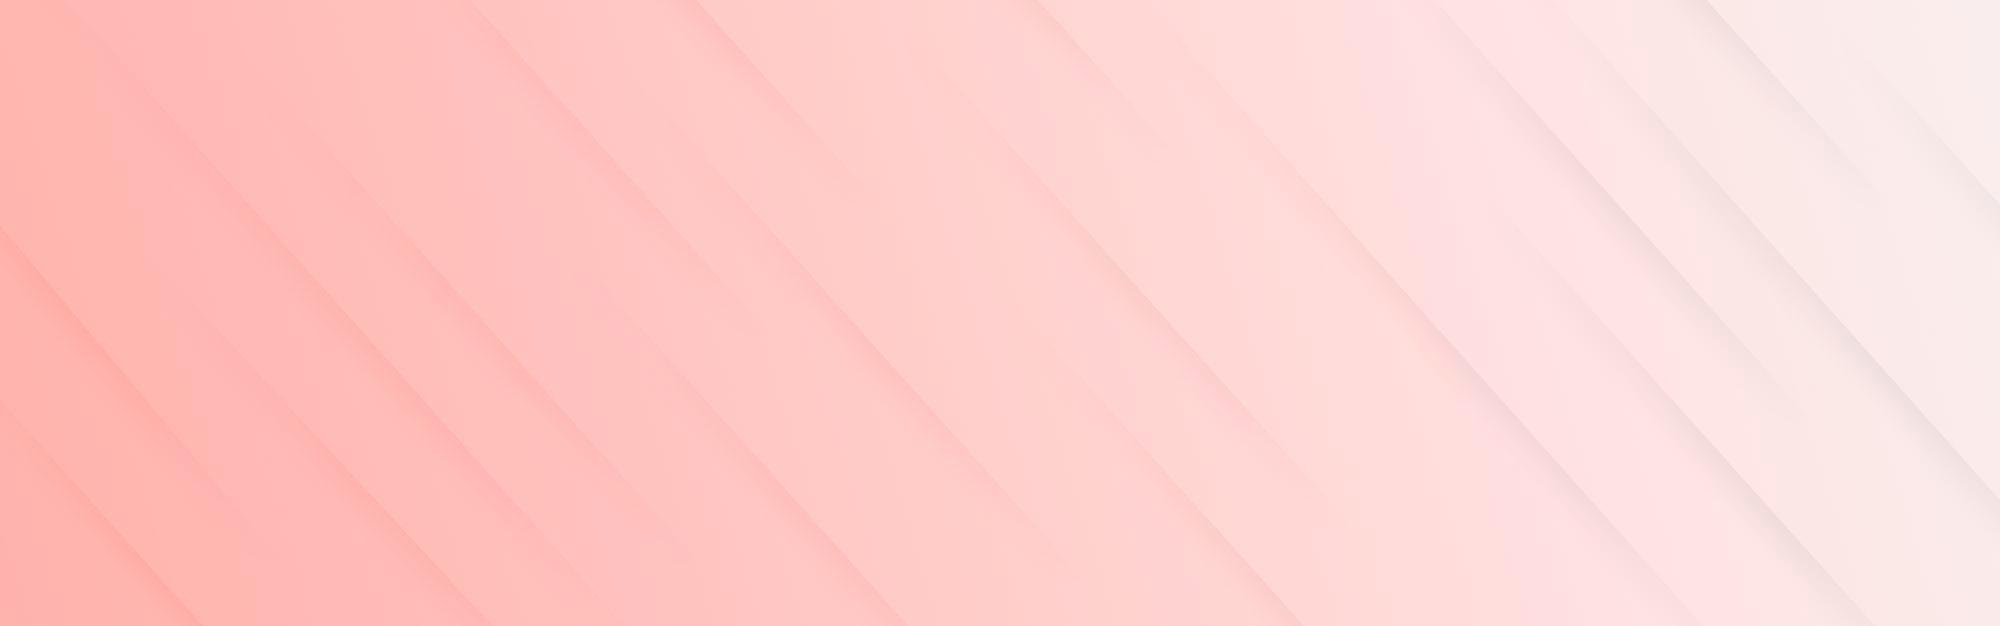 Premium Photo Pink Elegant Banner Template Light Blue Gradient